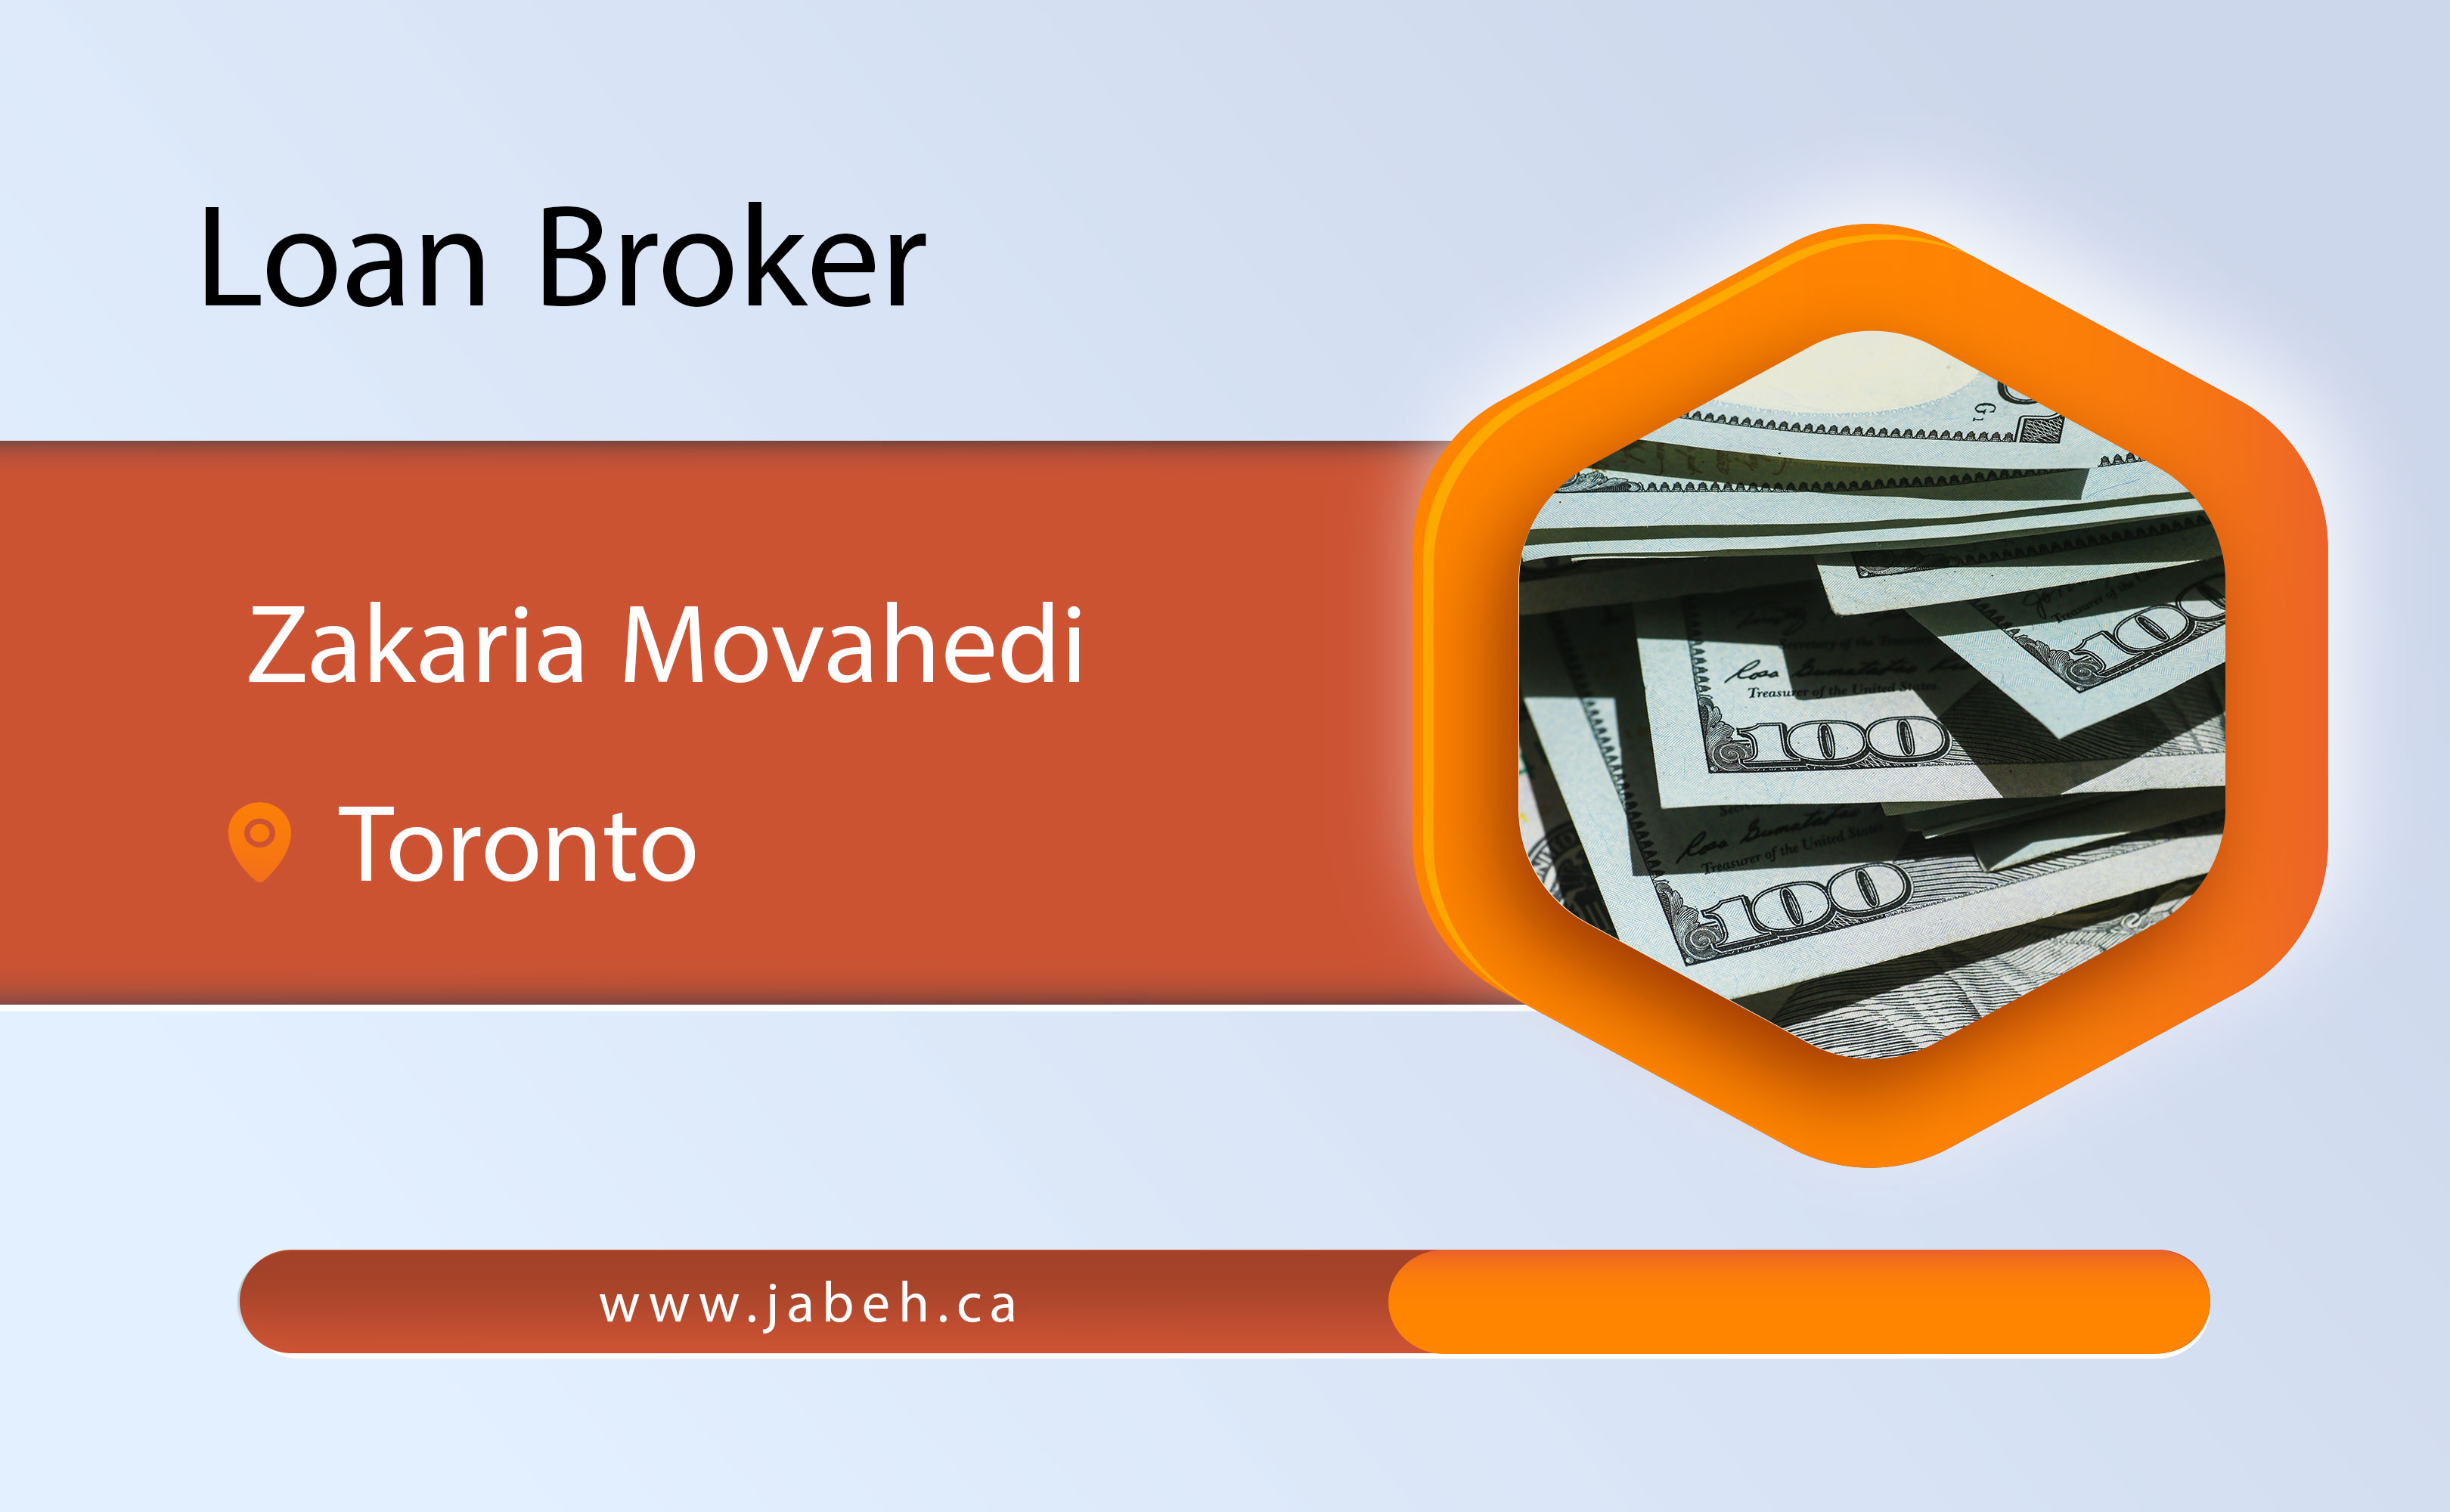 Iranian loan broker Zakaria Mohadi in Toronto